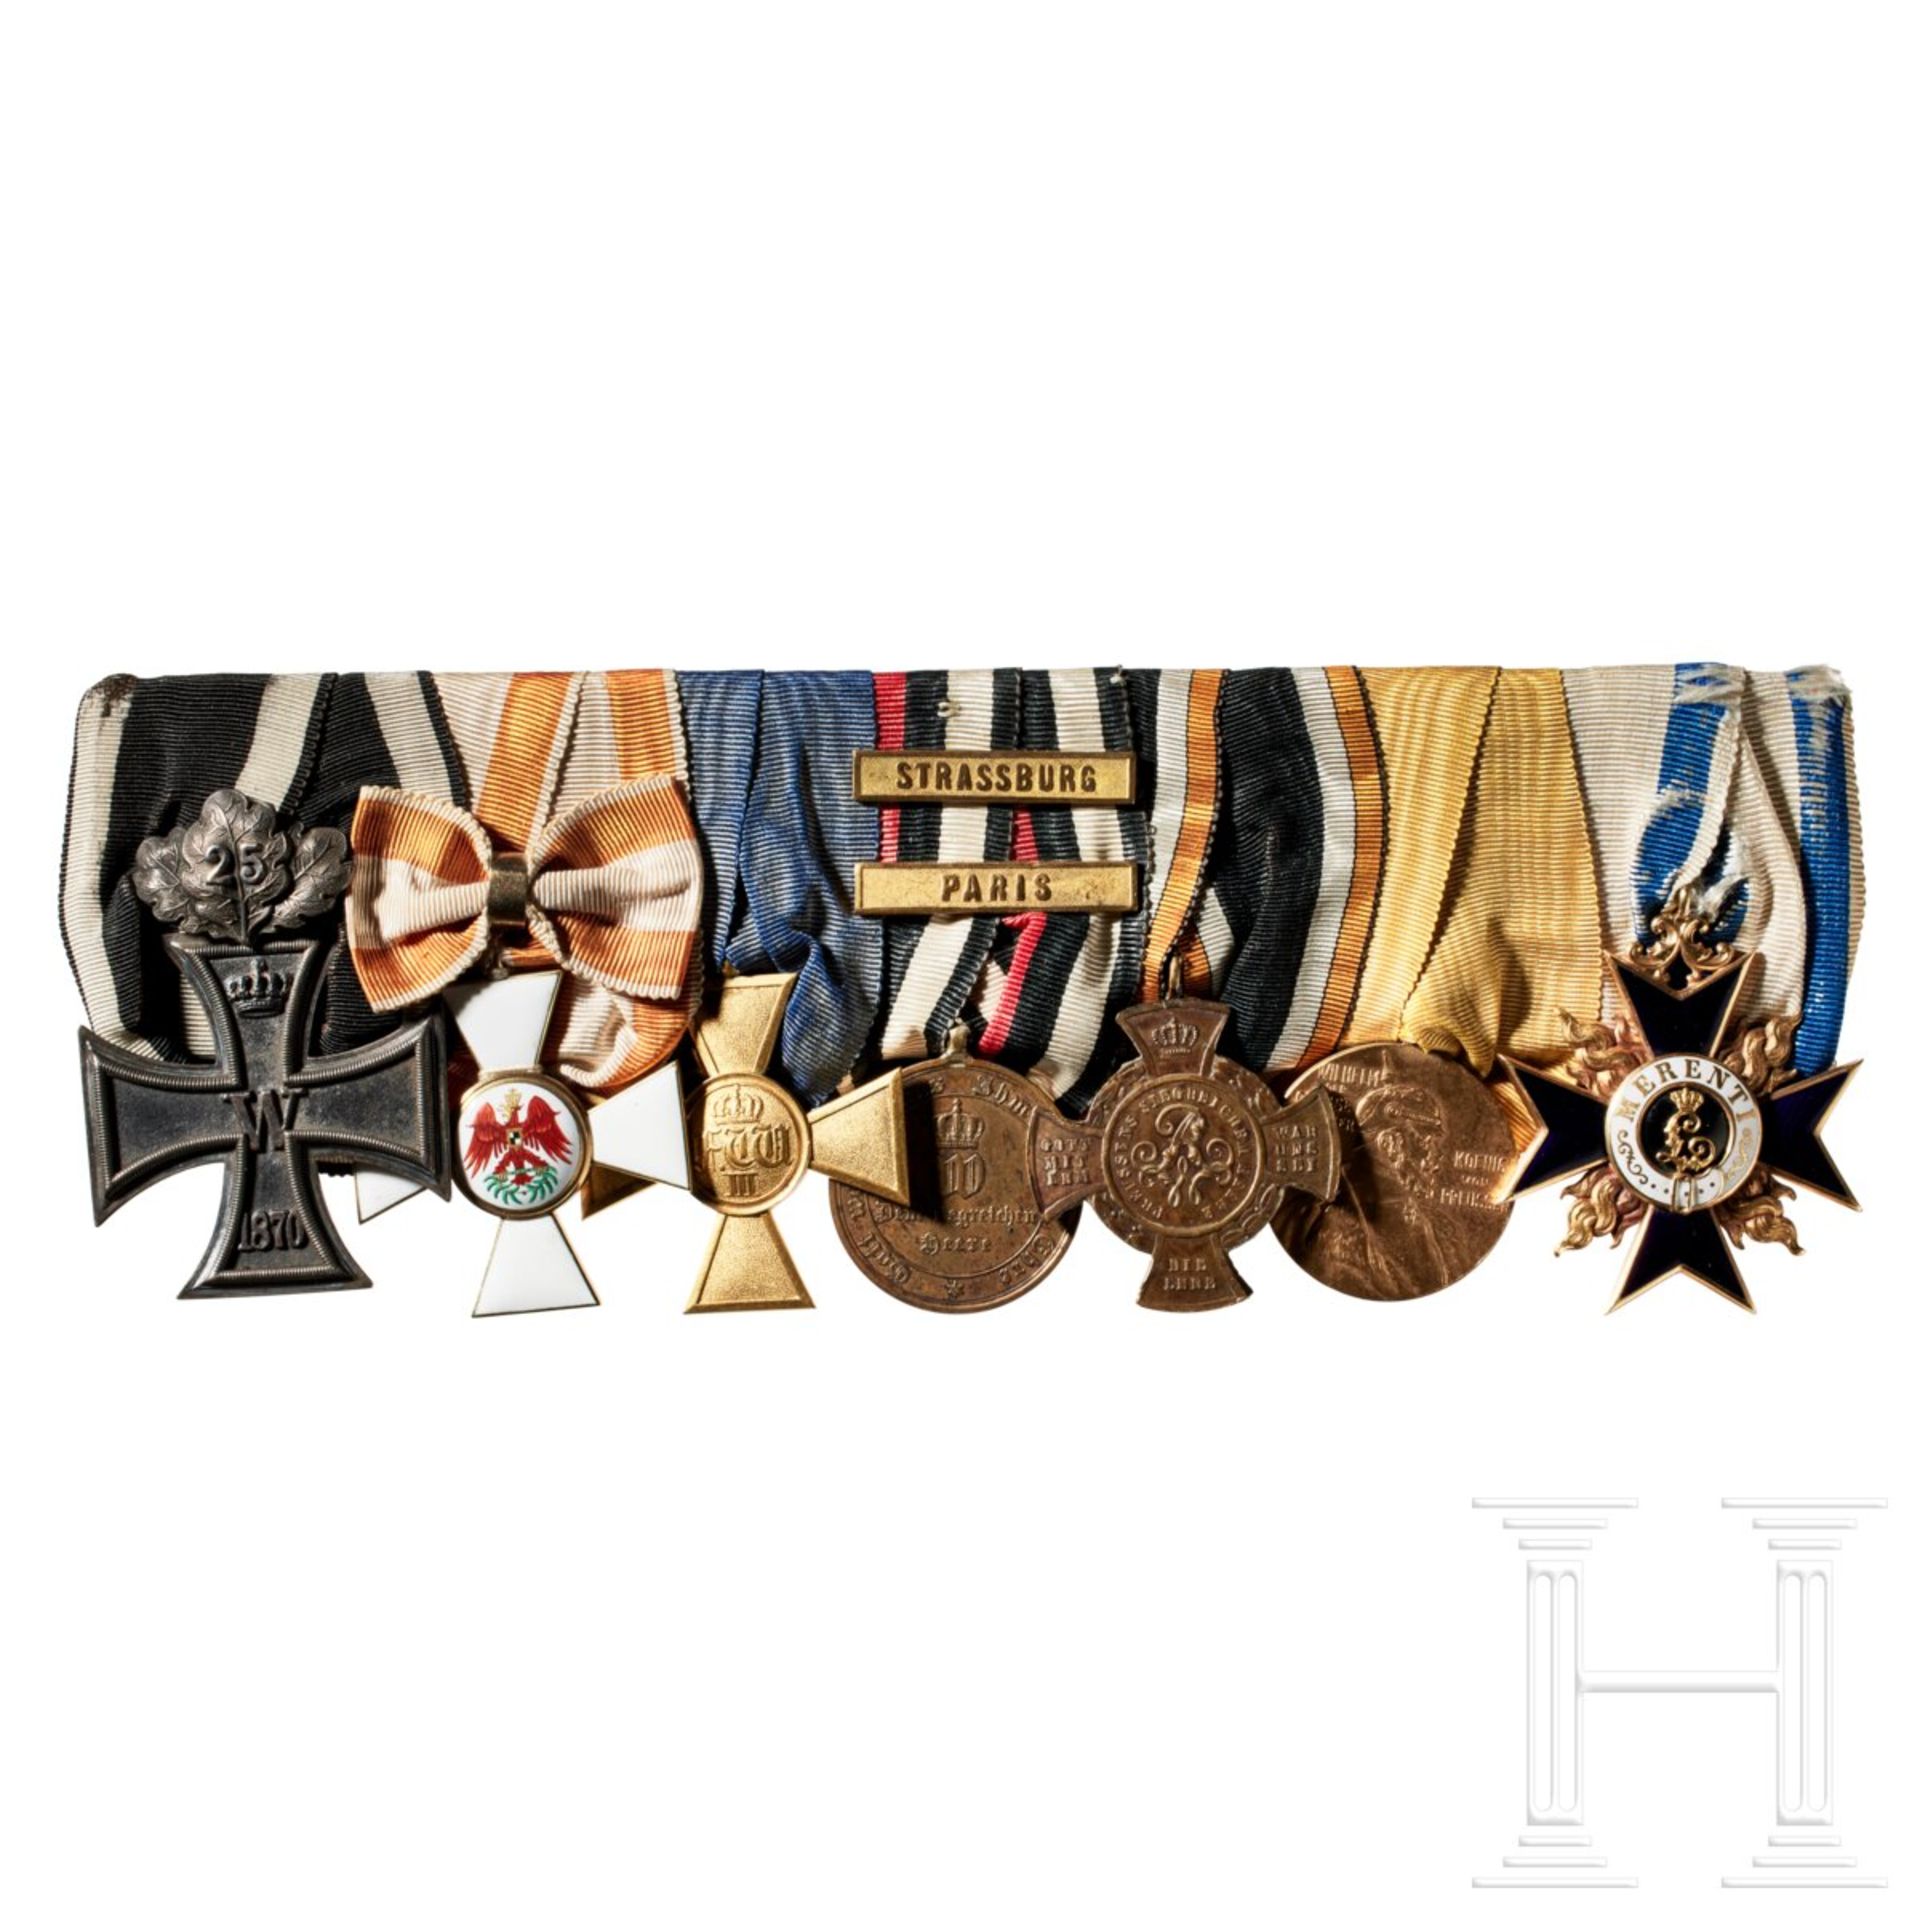 Brevet Major General Theodor August Adolf Krause - a medal bar, Franco Prussian Era